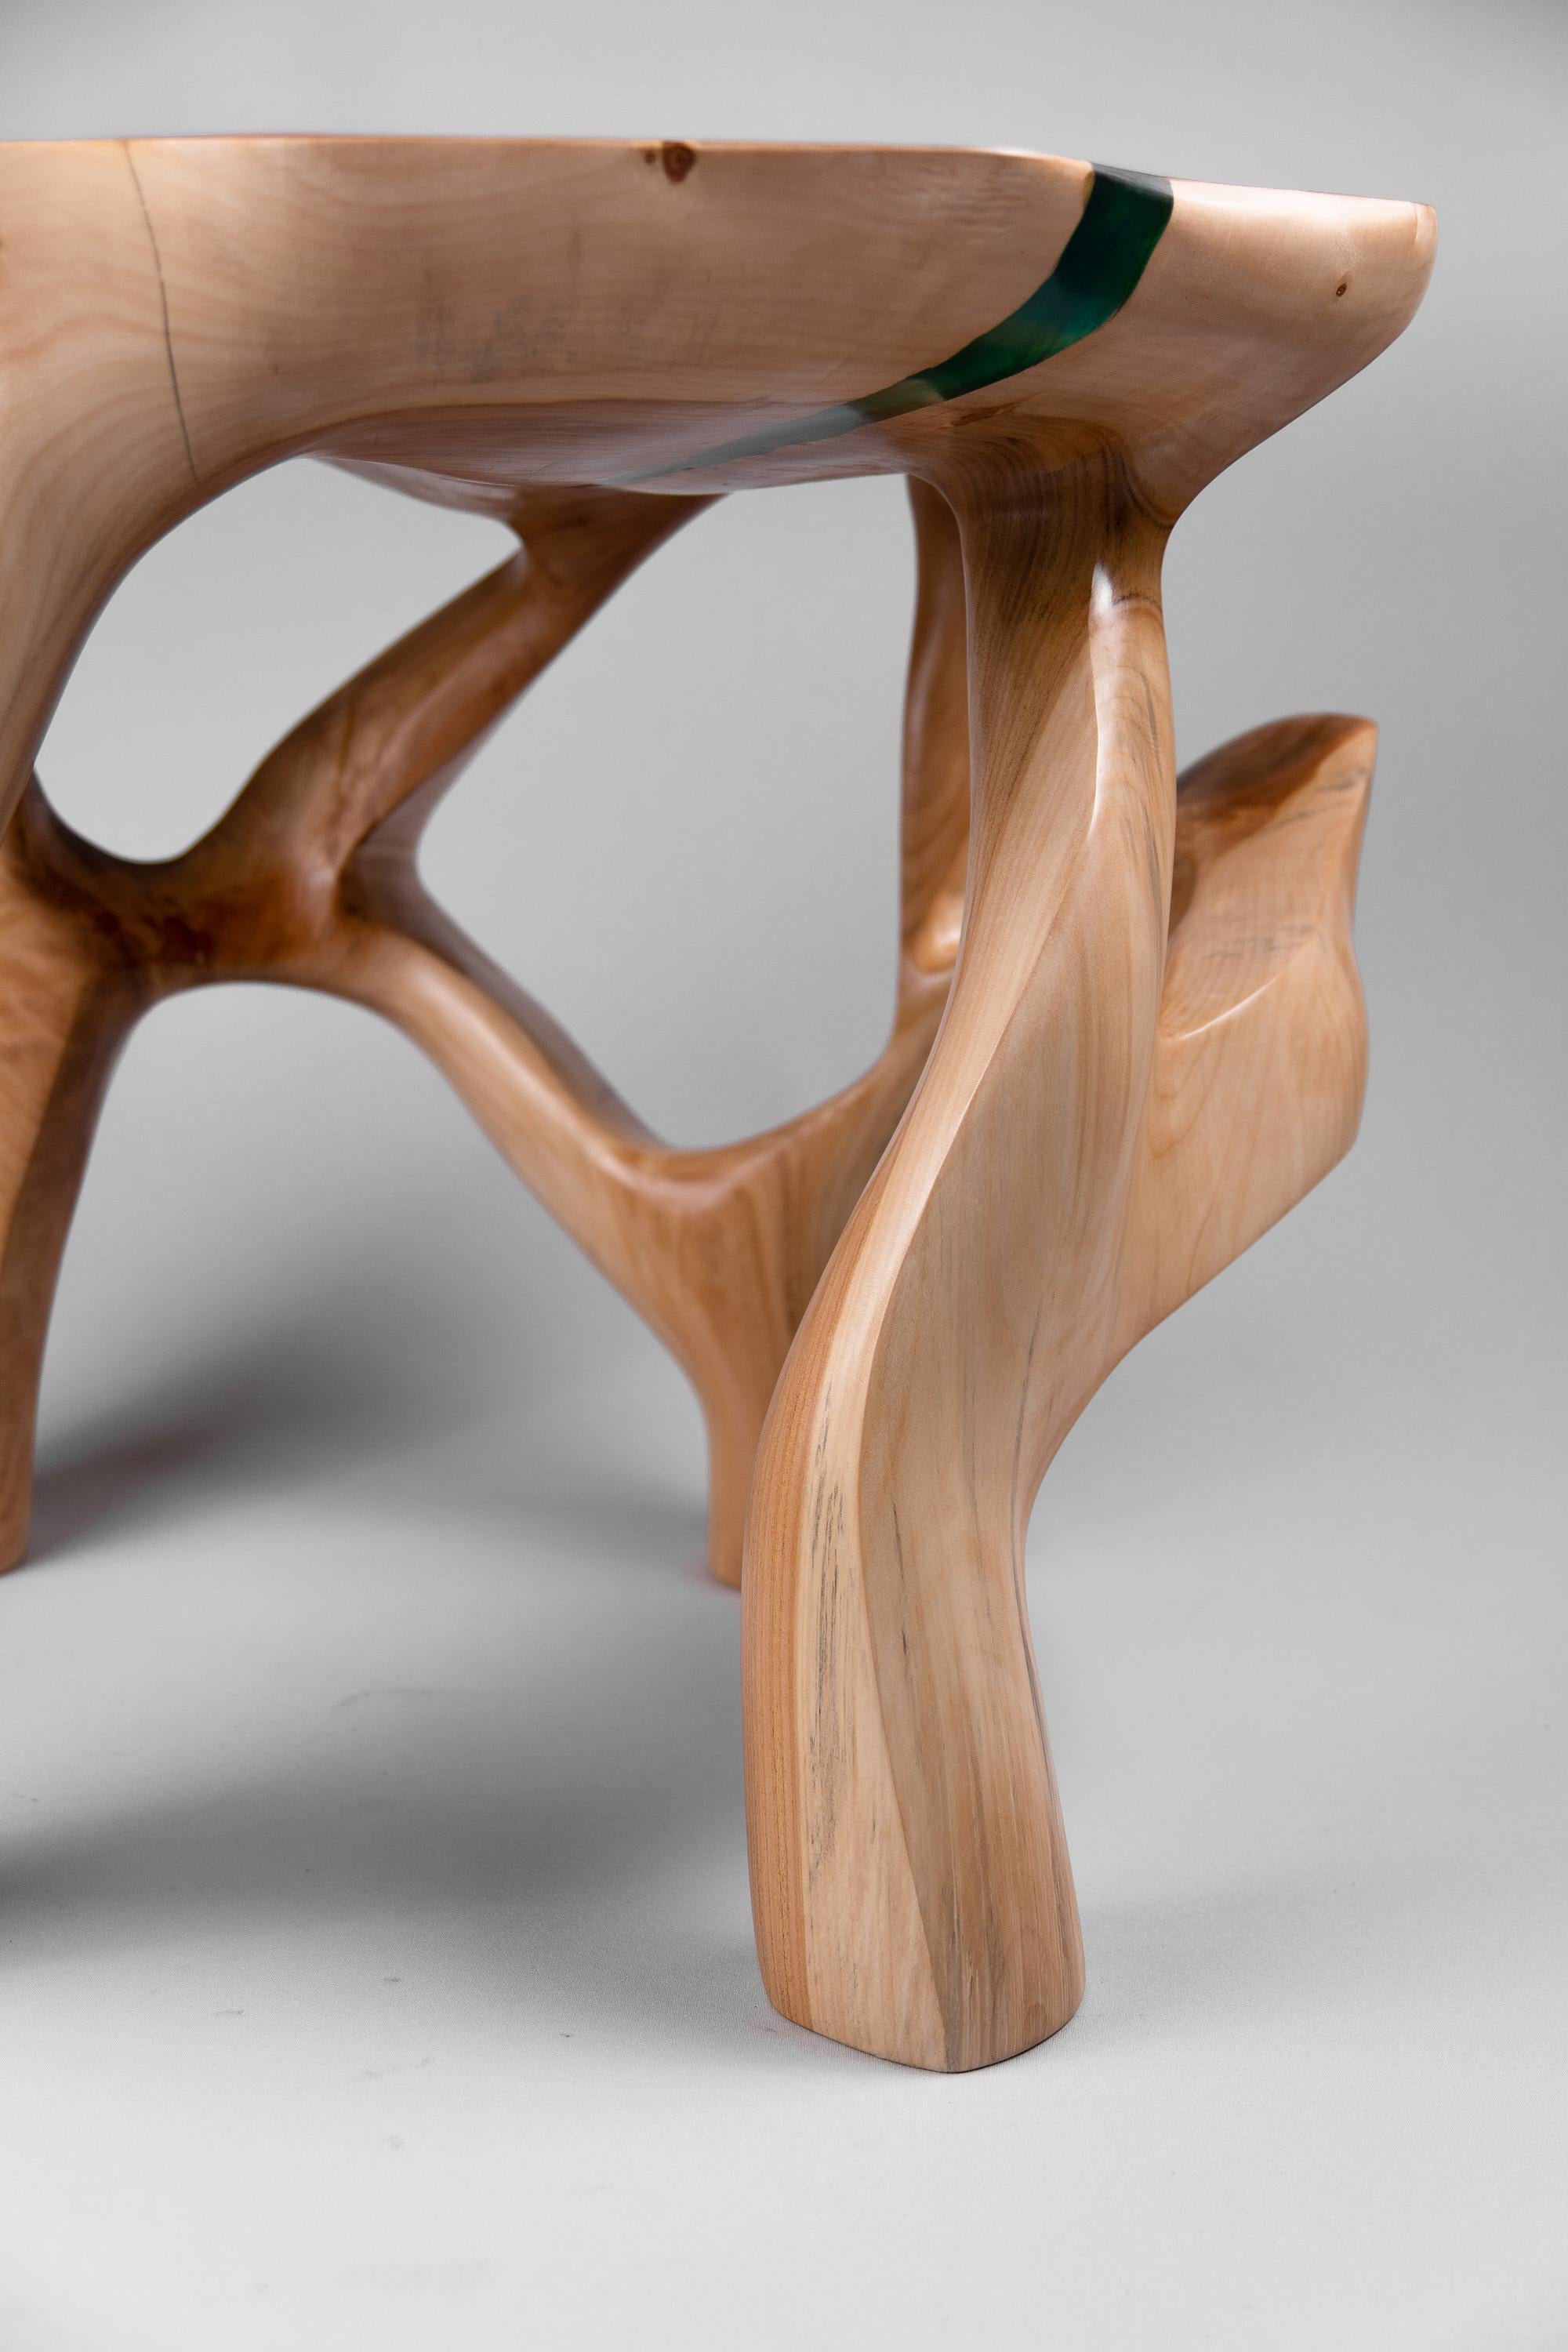 Domus, Solid Wood Sculptural Side, Table Original Contemporary Design, Lognitur For Sale 5